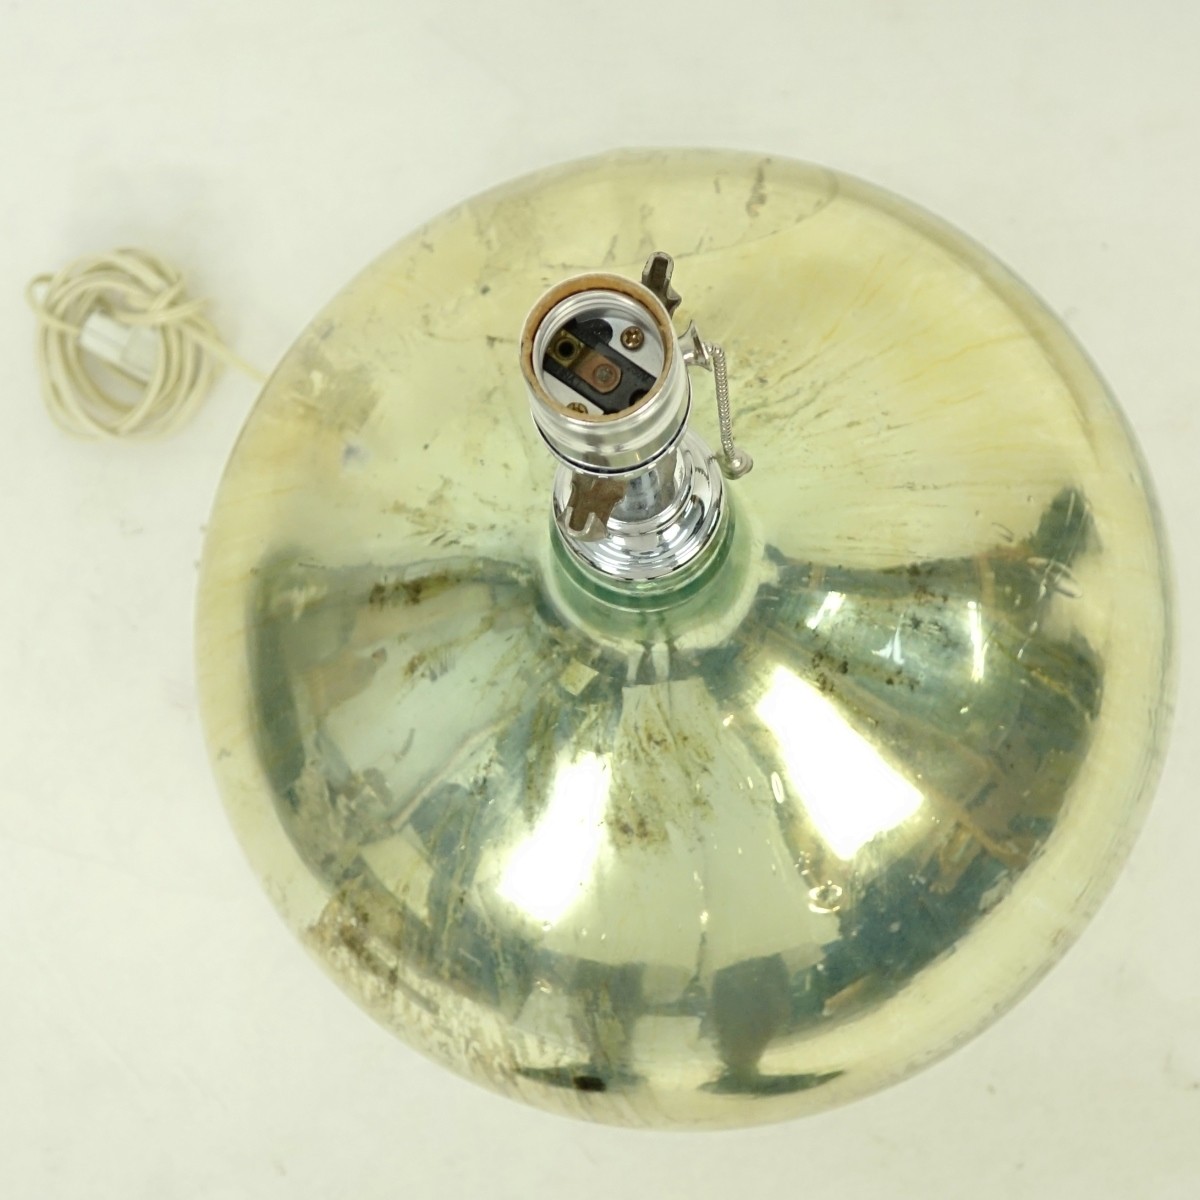 Mercury Glass Lamp